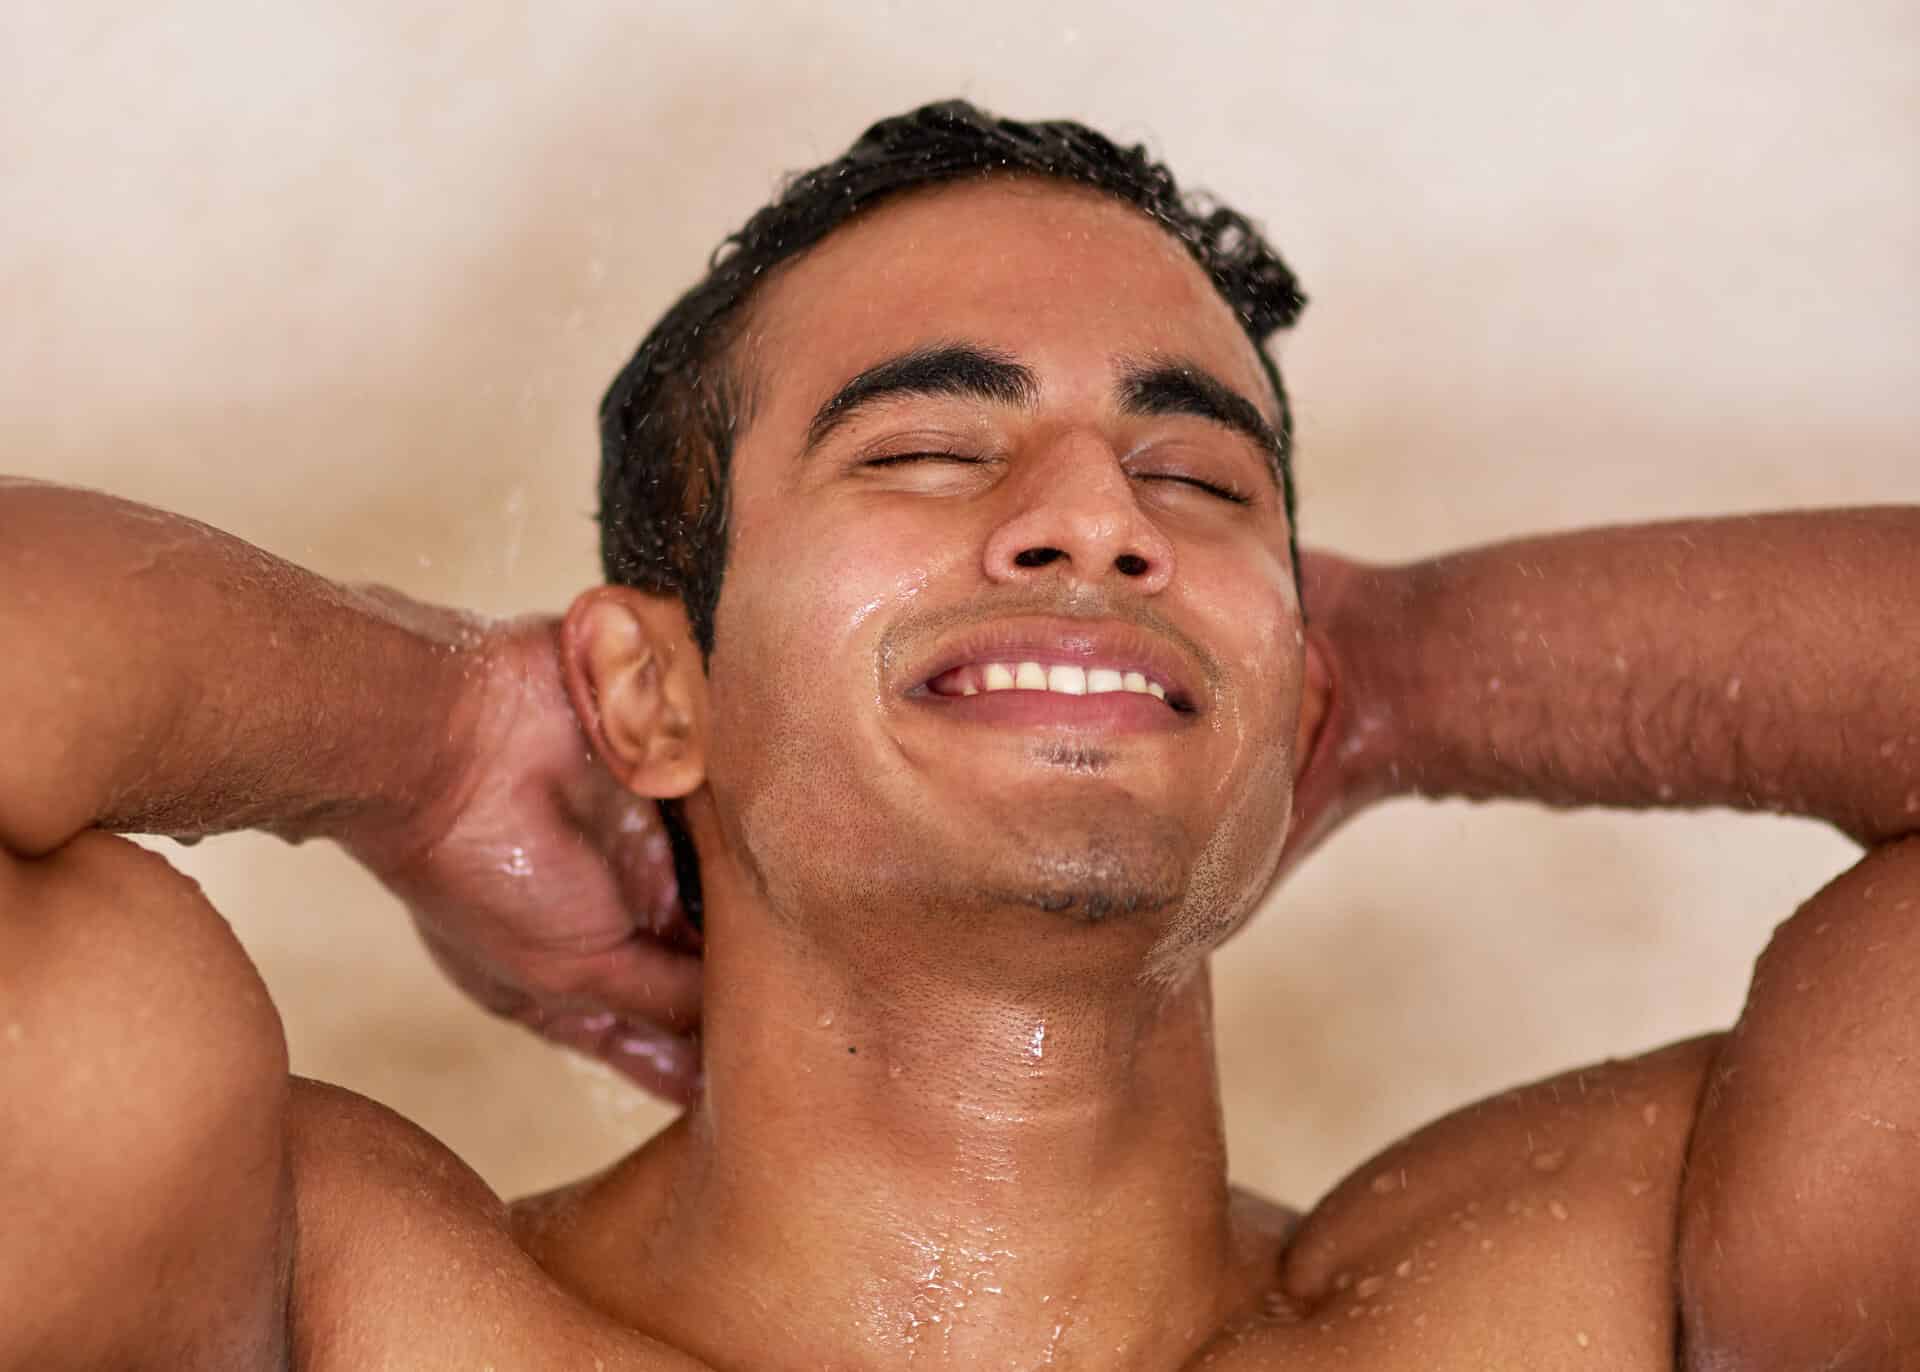 handsome young man enjoying shower